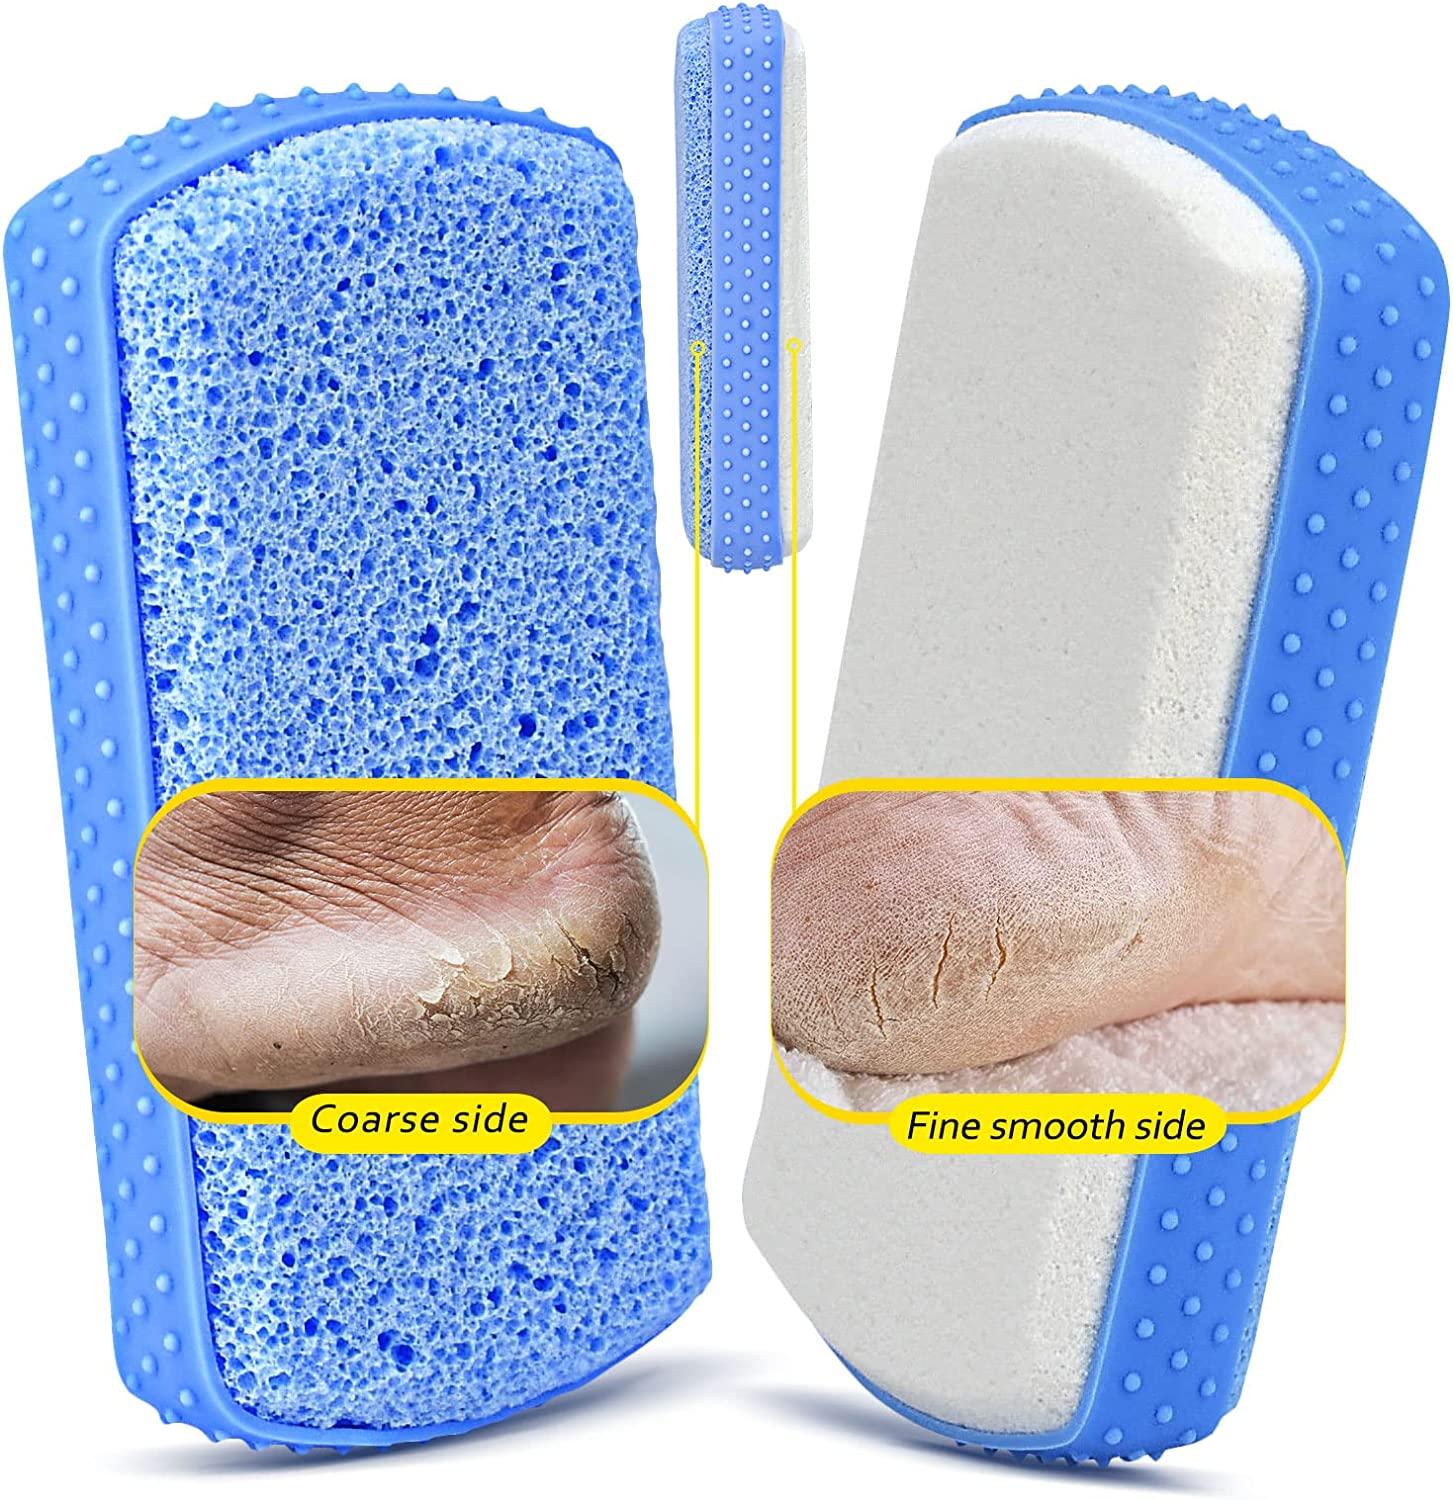  Maryton Pumice Sponge for Feet, Ultimate Pedicure